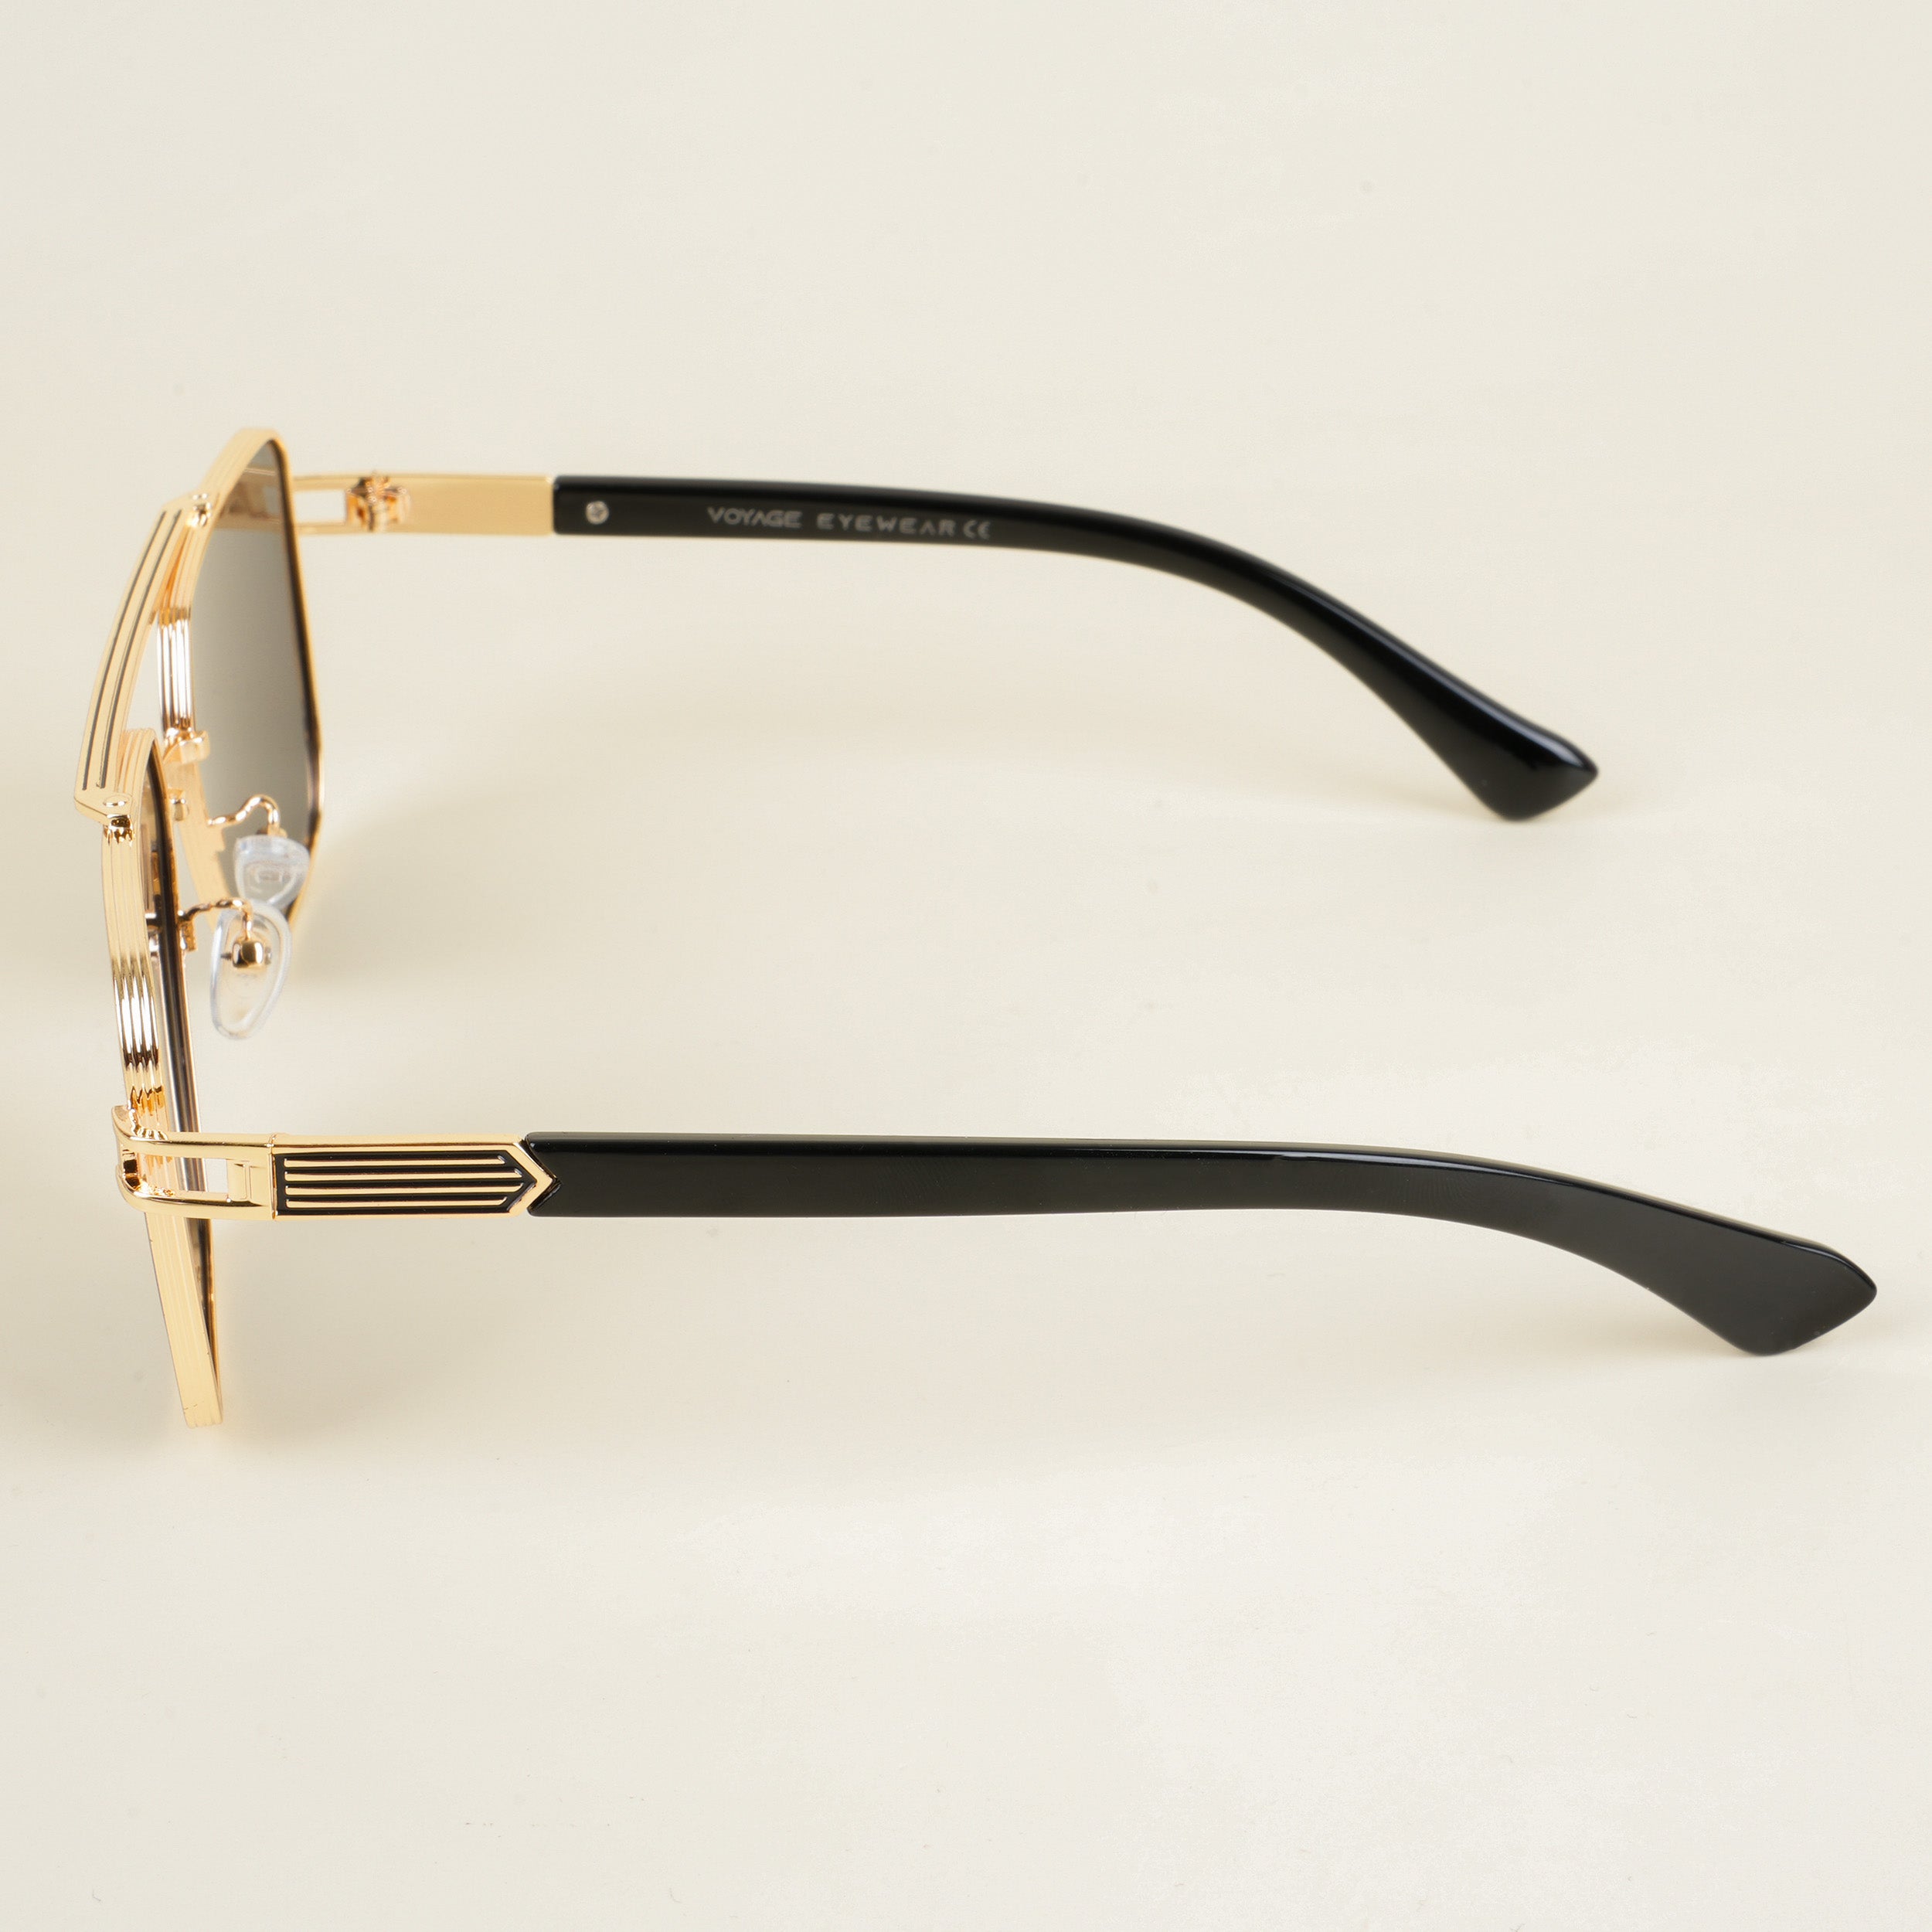 Voyage Wayfarer Sunglasses for Men & Women (Grey Lens | Golden Frame - MG5234)